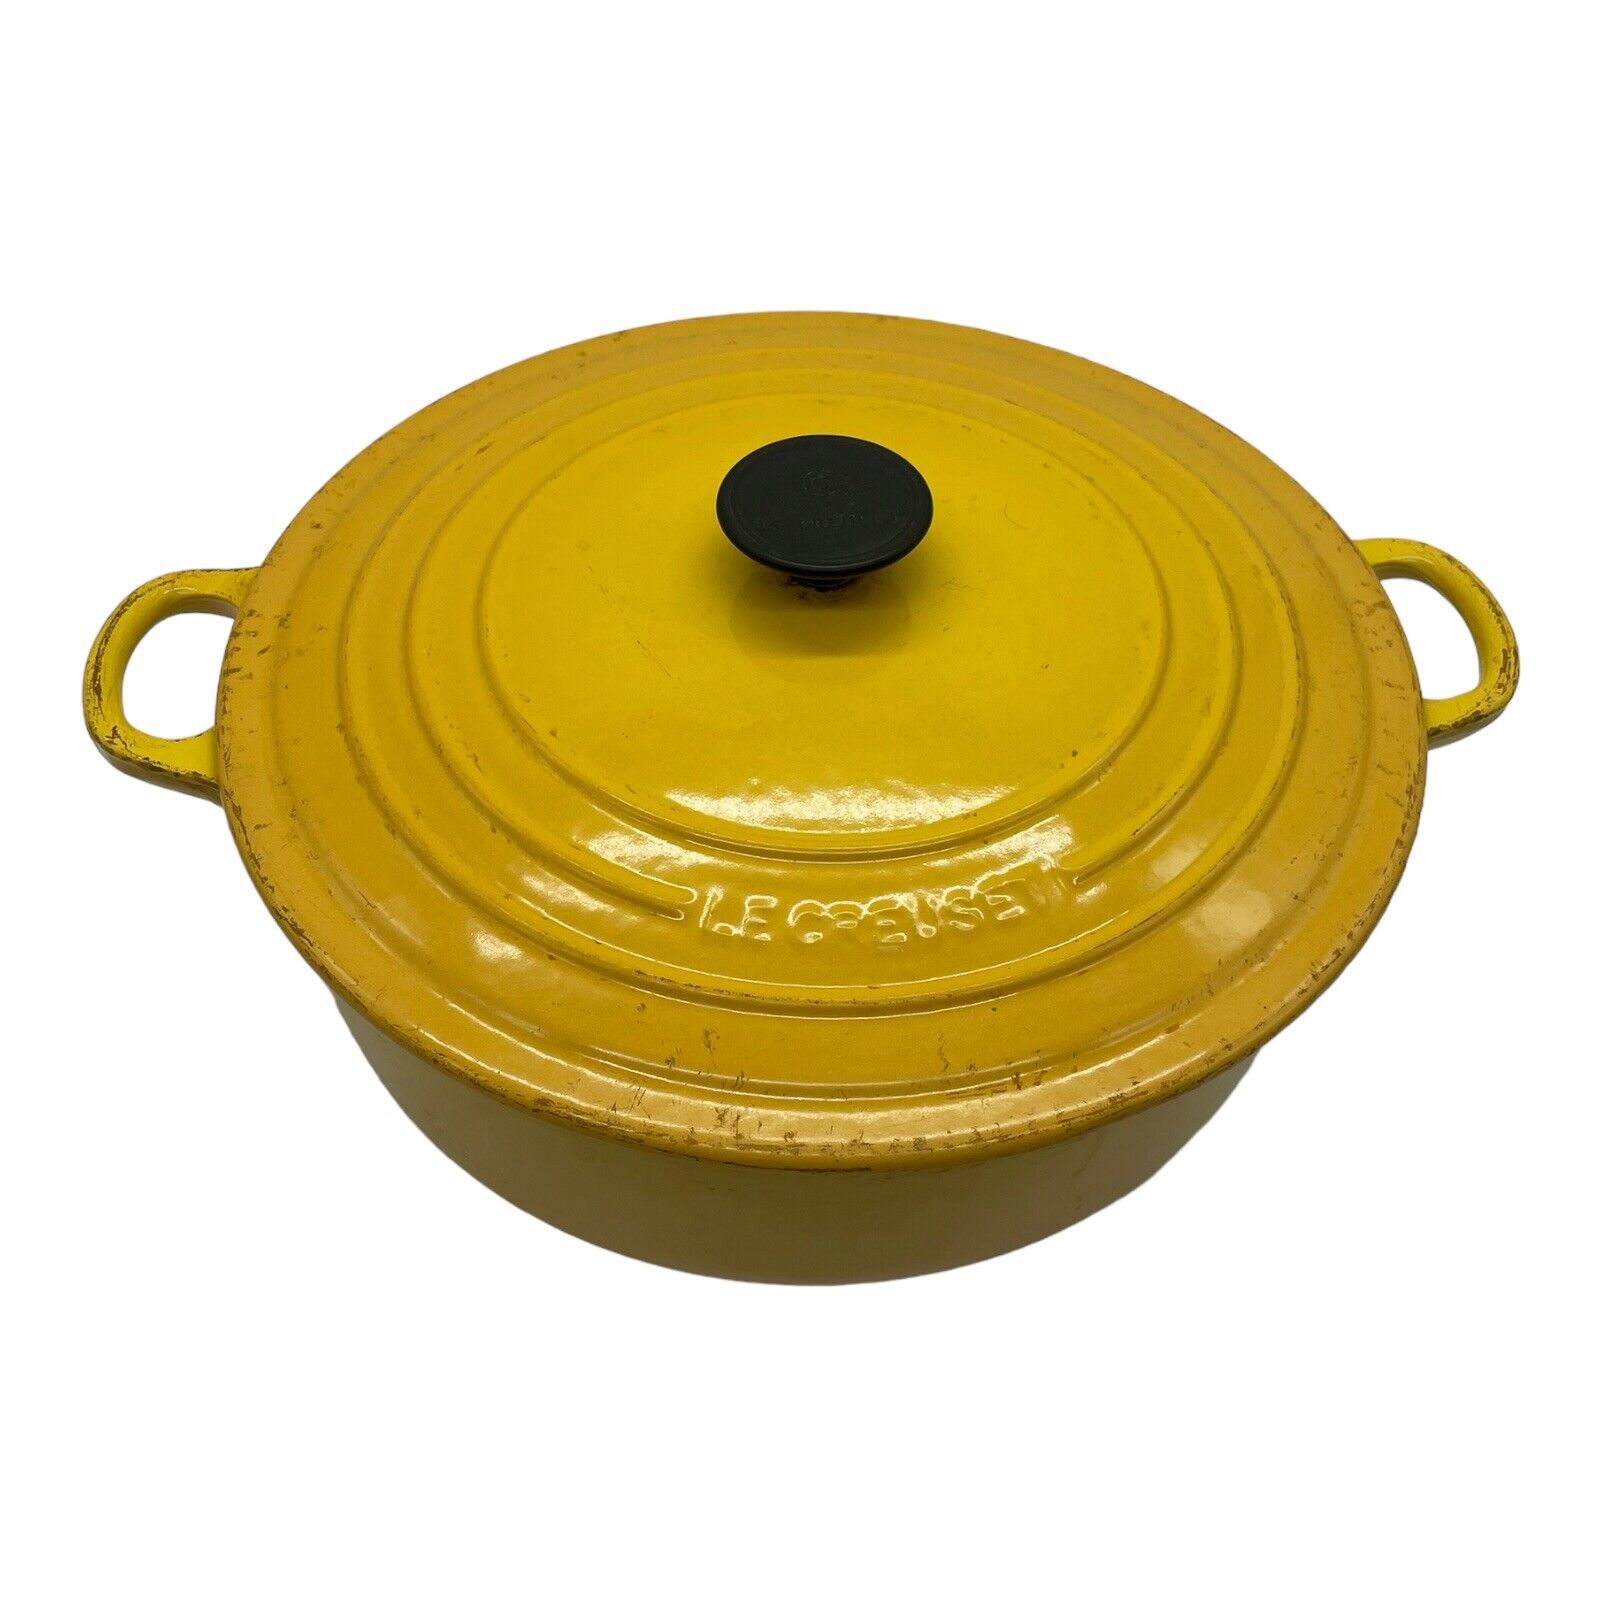 Le Creuset Enameled Cast Iron Round Risotto Pot #30 6.75 Qt Yellow Dutch Oven